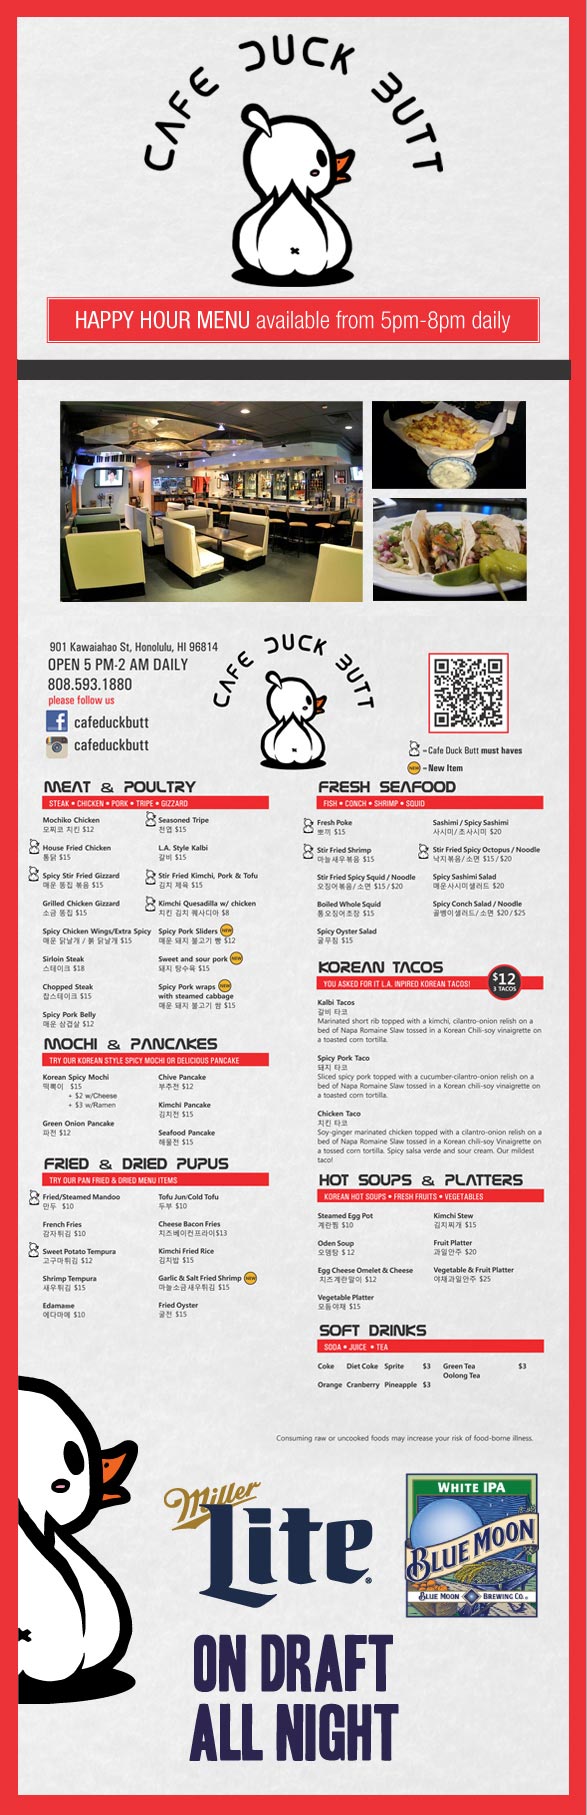 cafe-duck-butt-happy-hour-menu-jpg